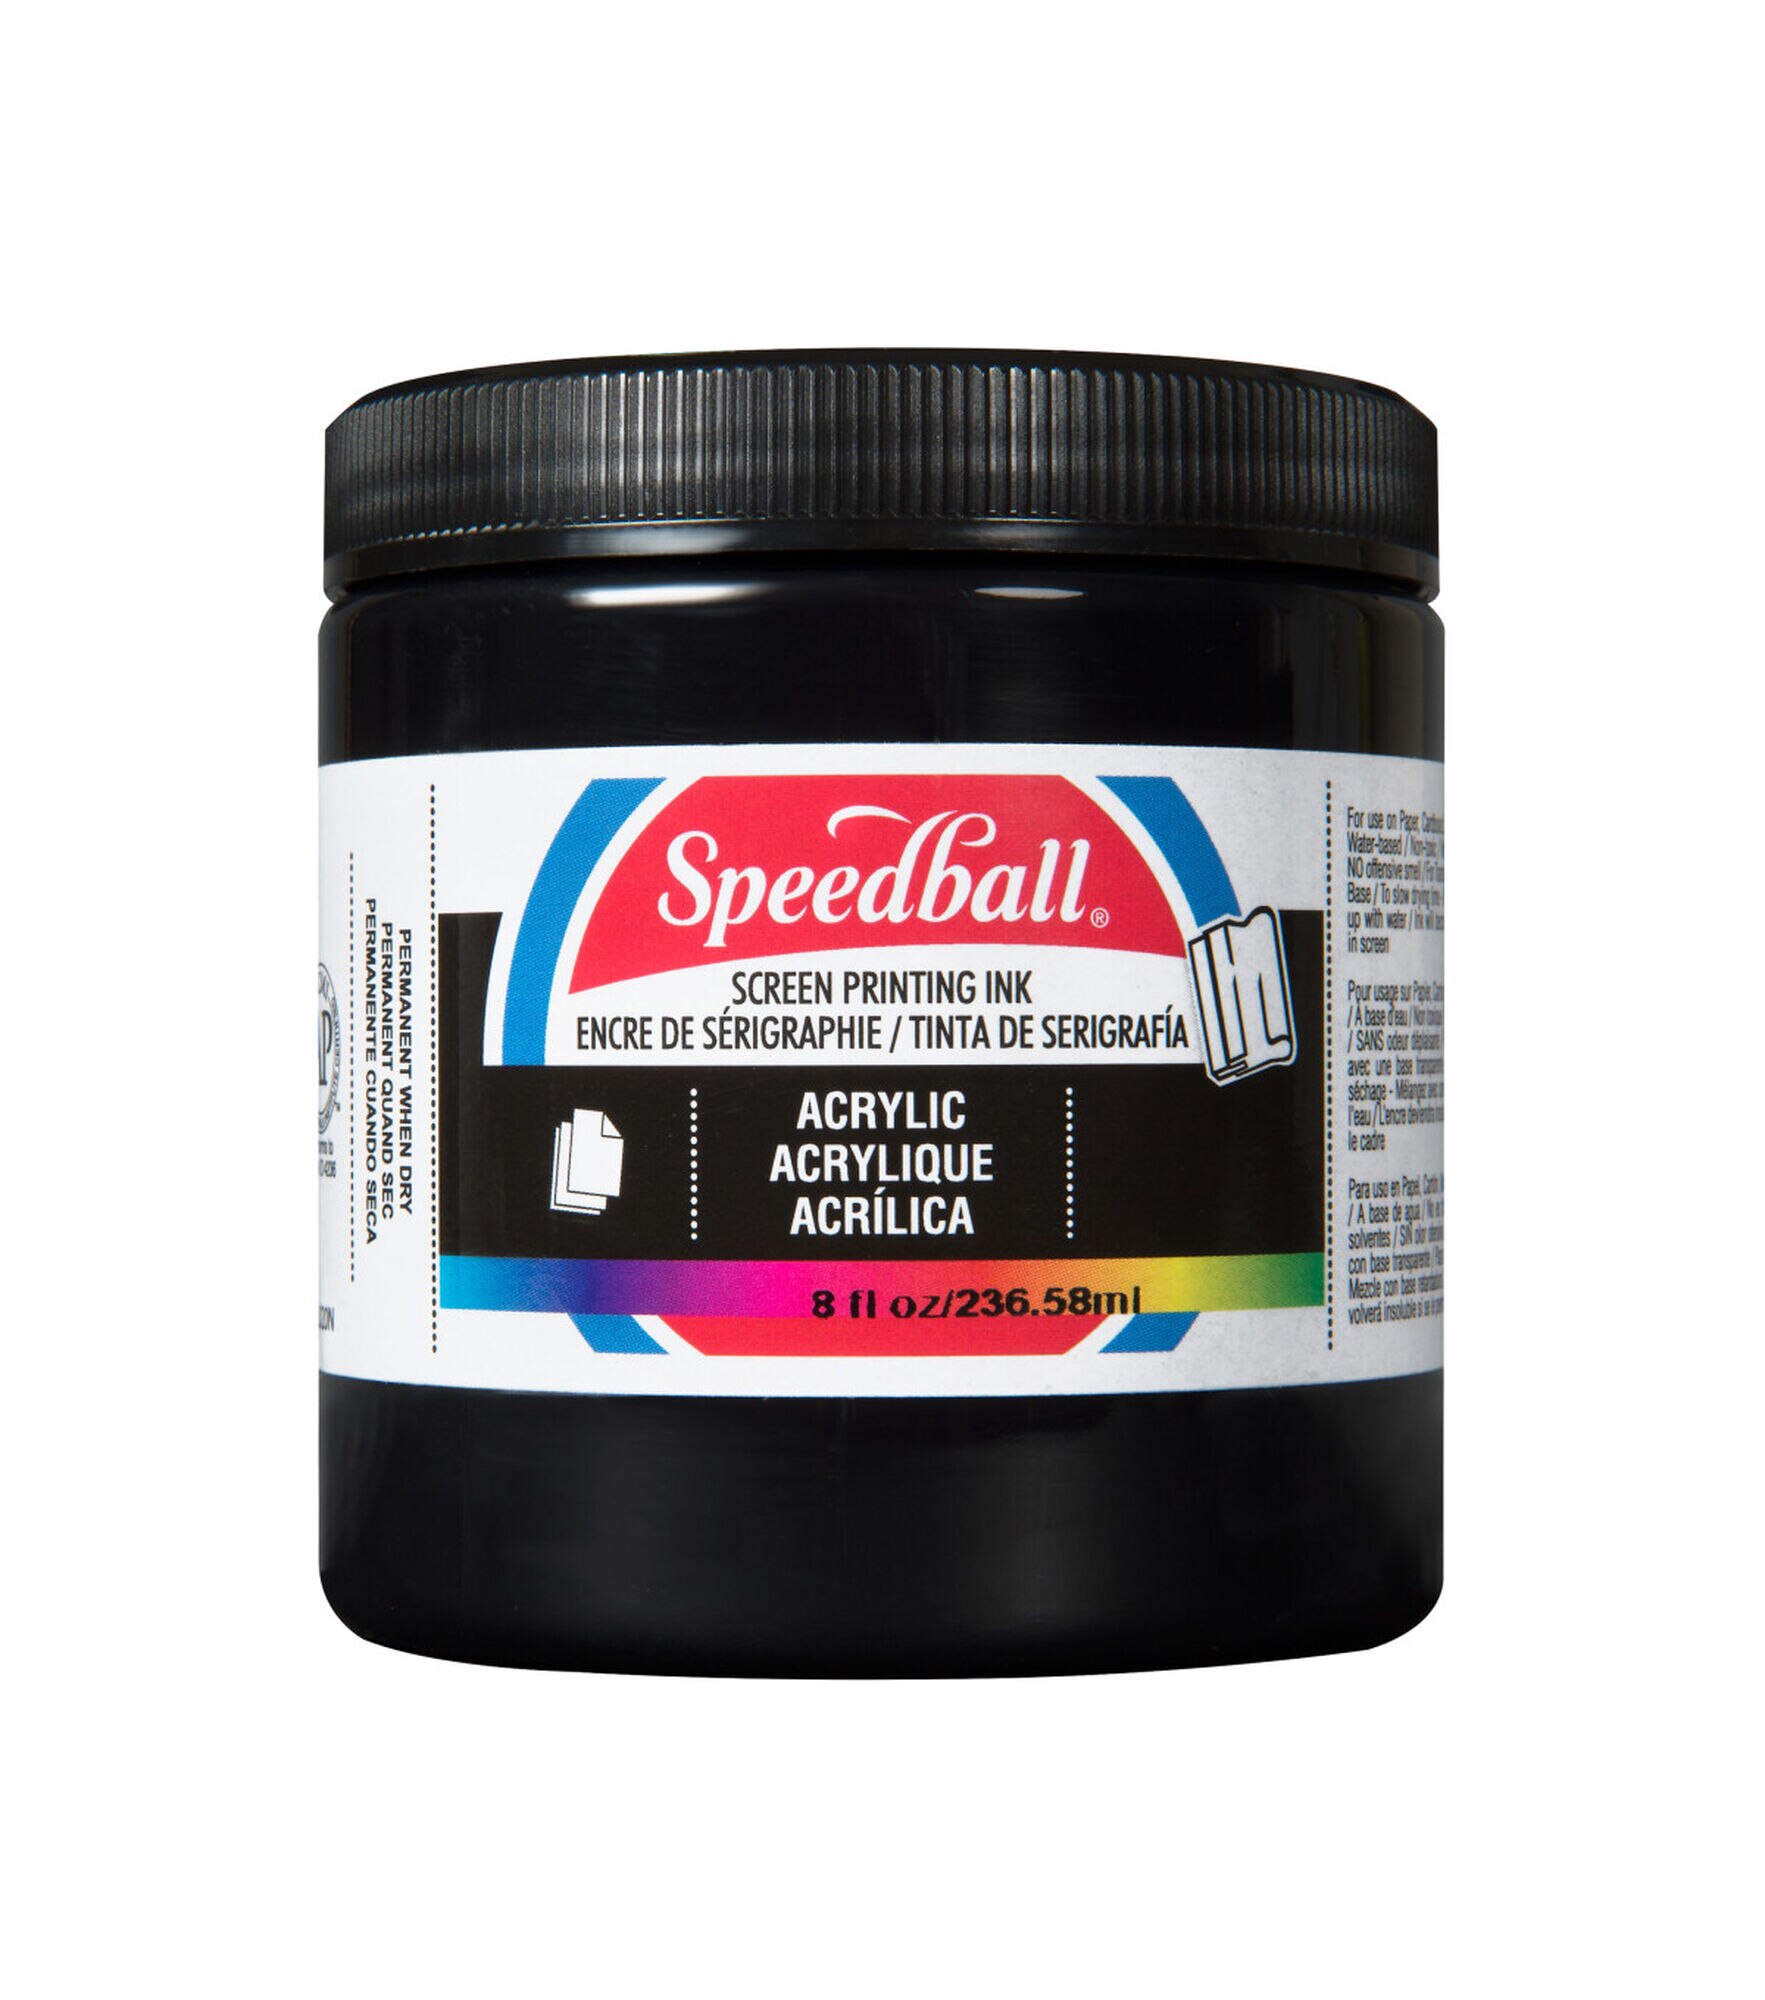 Speedball Fabric Screen Printing Ink, 4 oz Jars, Set of 4